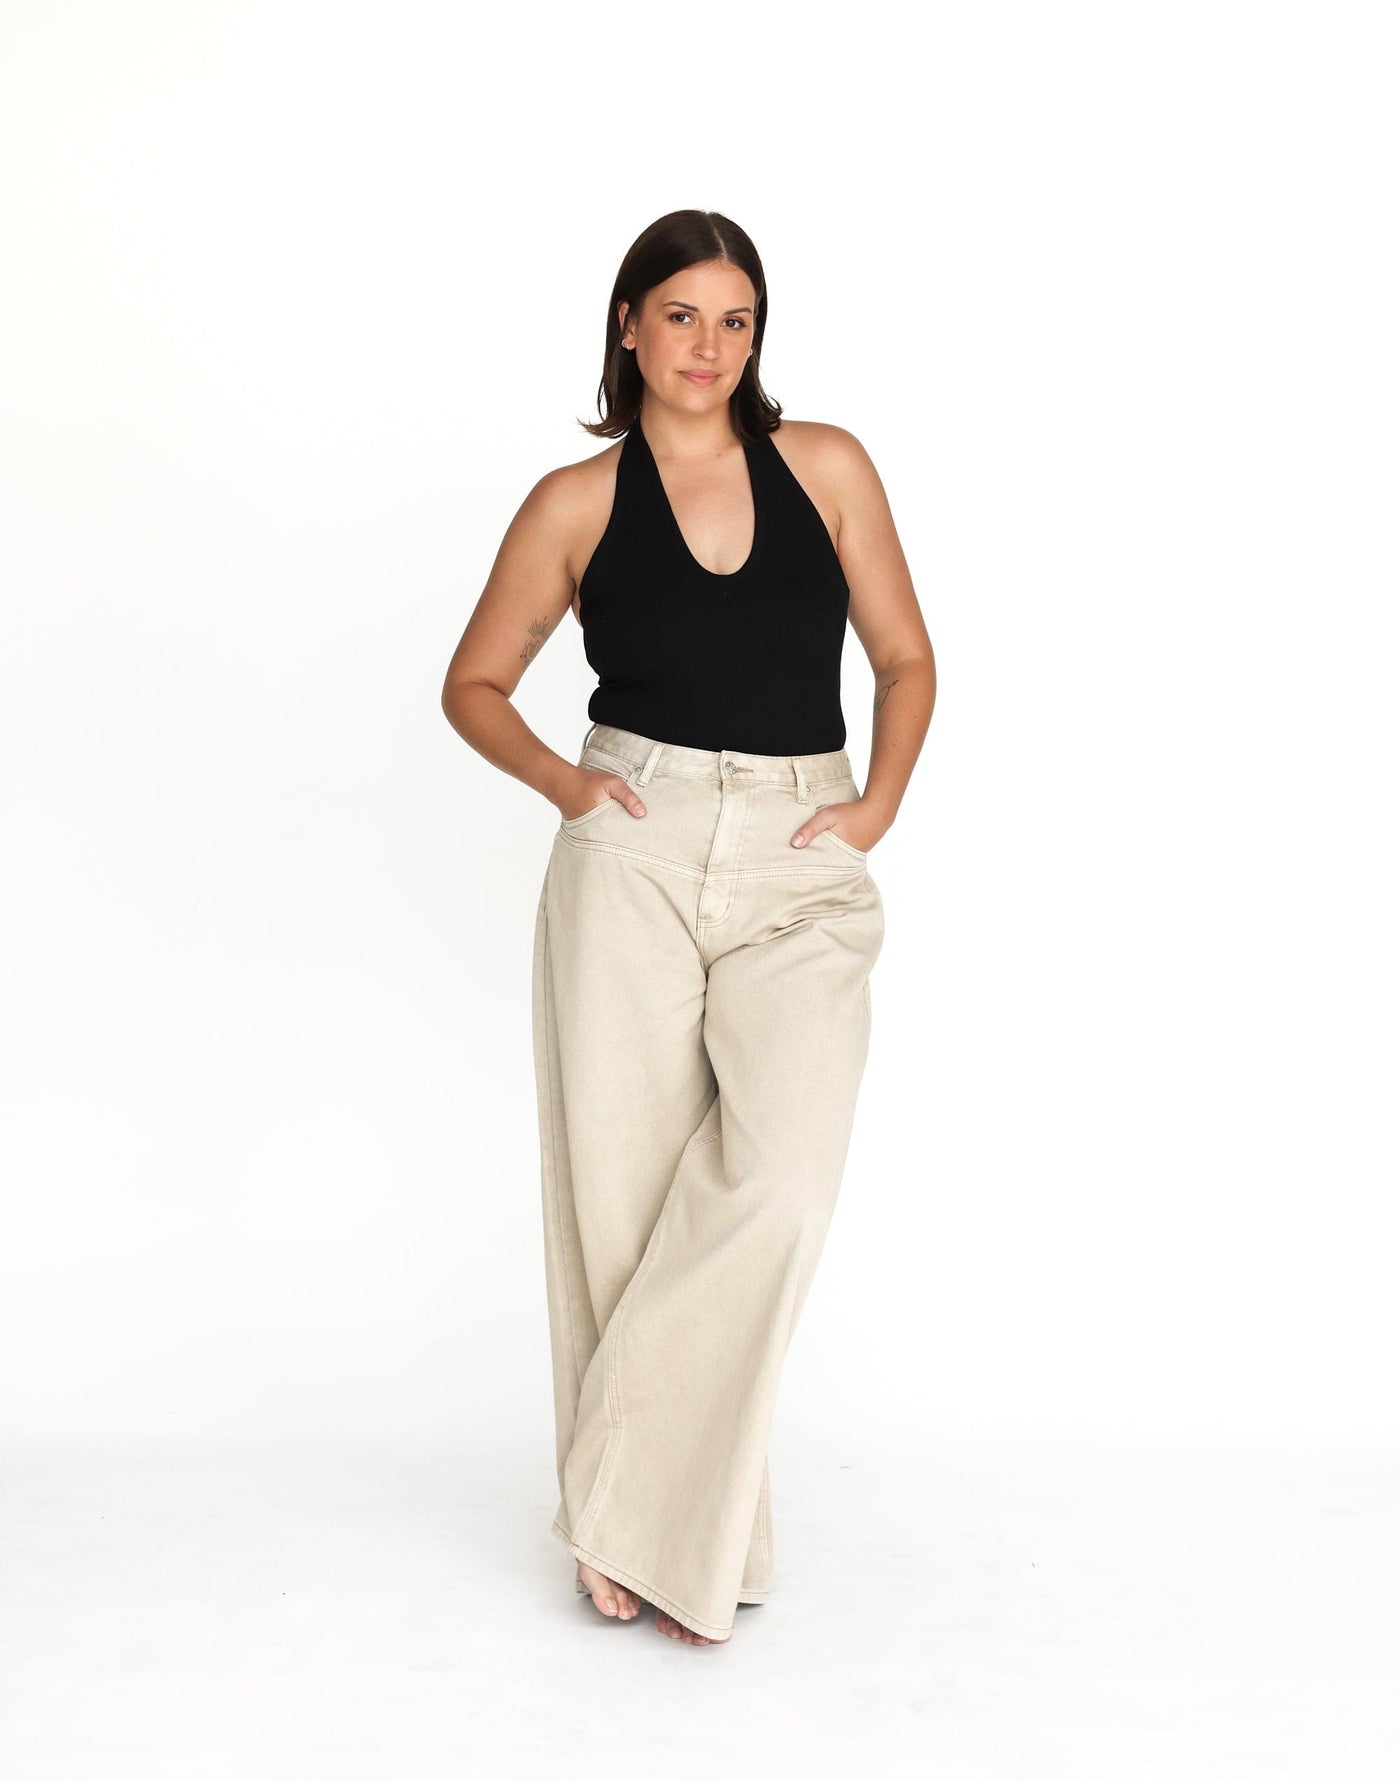 Arwen Bodysuit (Black) | CHARCOAL Exclusive - Ribbed Low Neck Halter Bodysuit - Women's Top - Charcoal Clothing